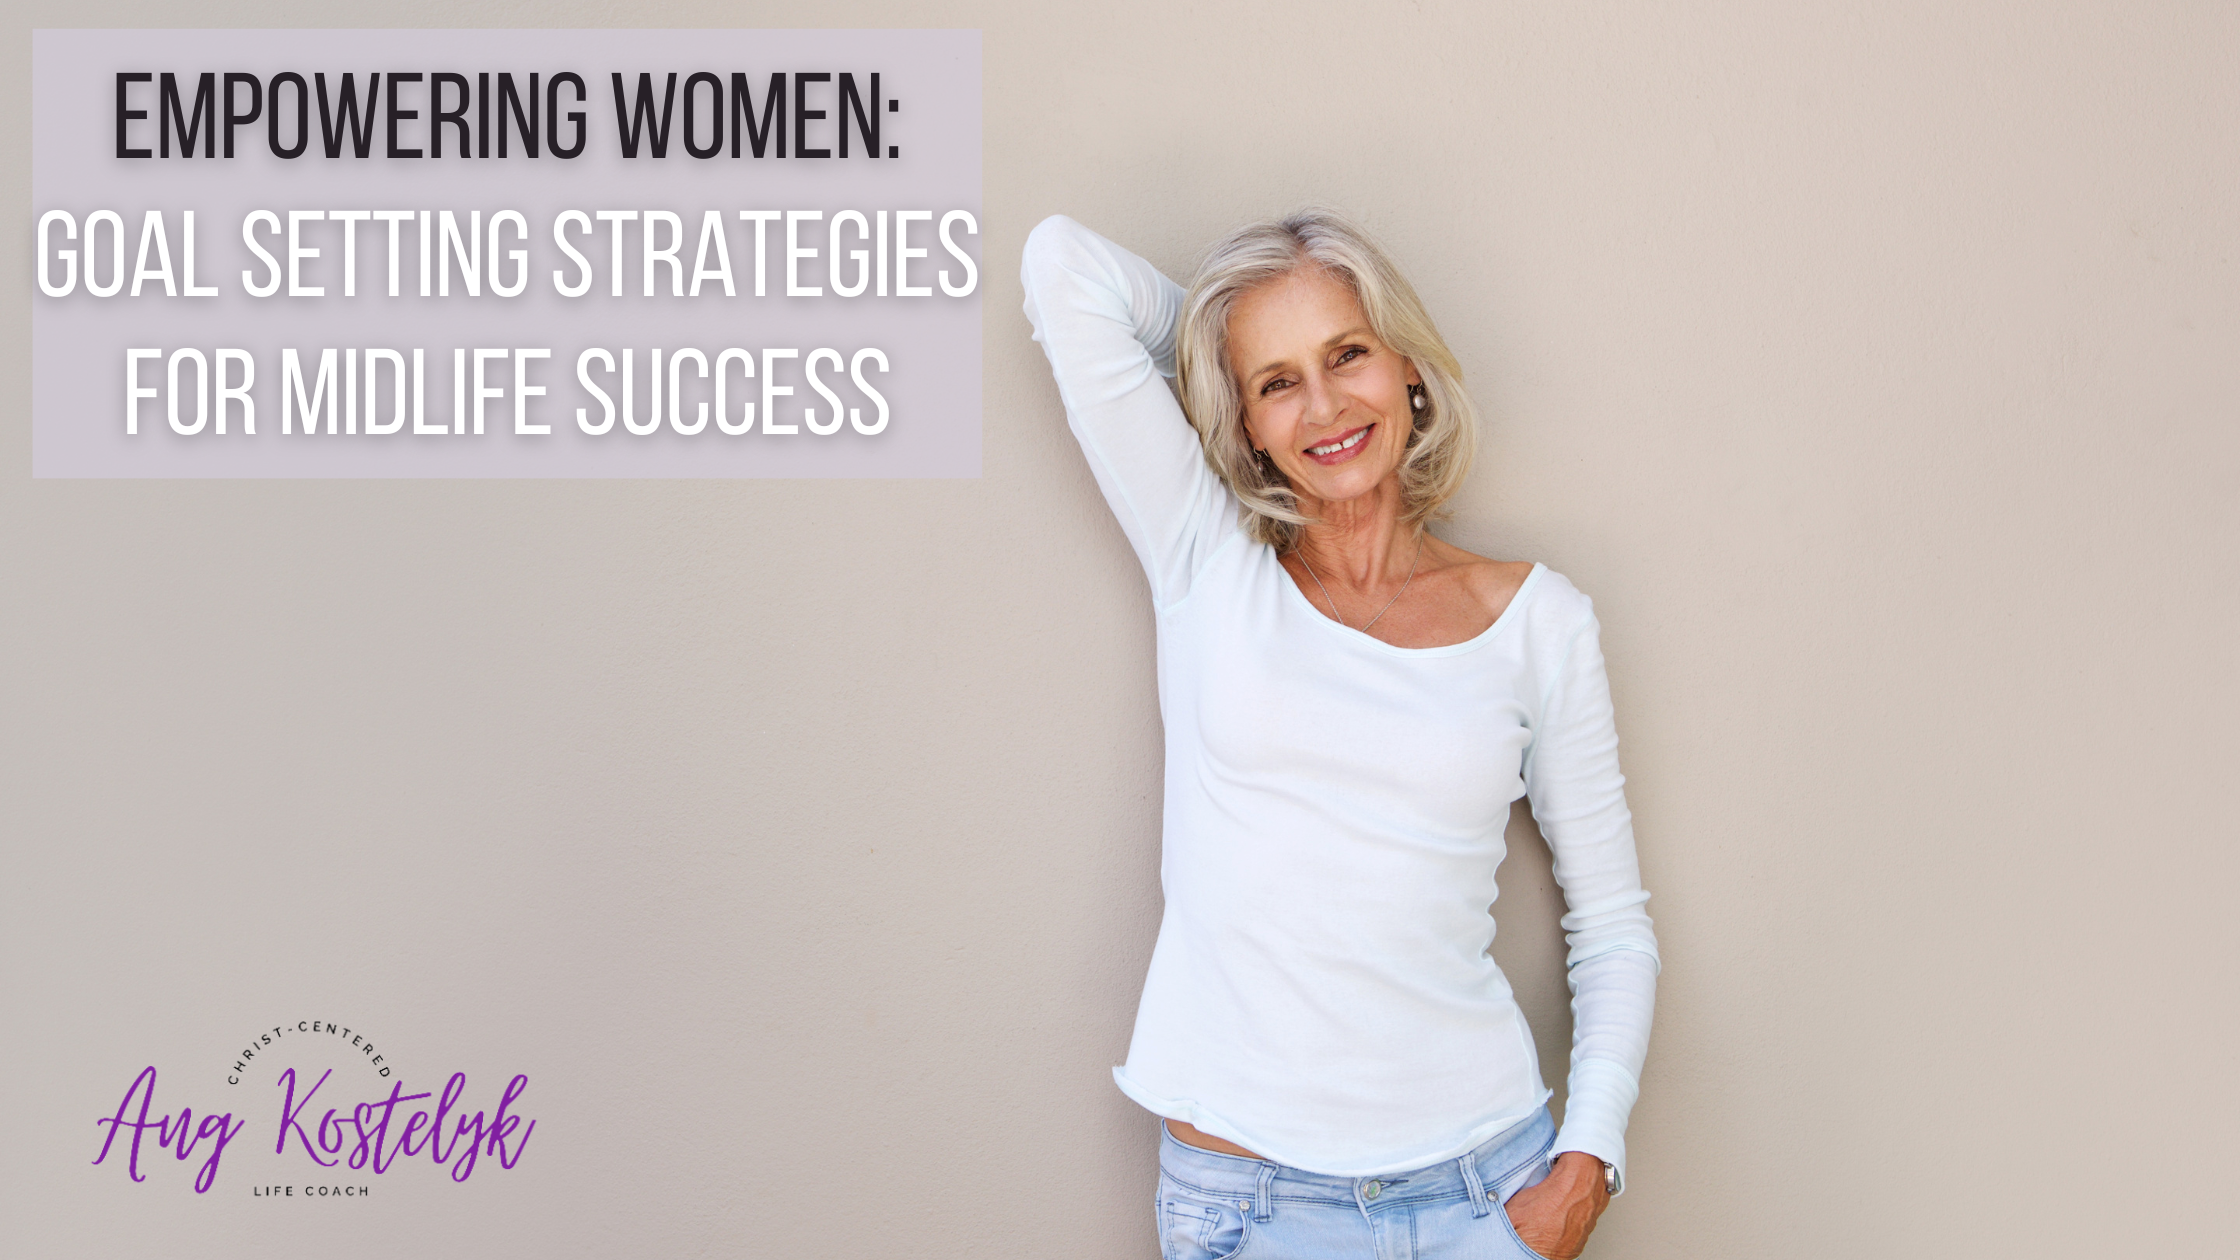 Goal setting strategies for midlife success